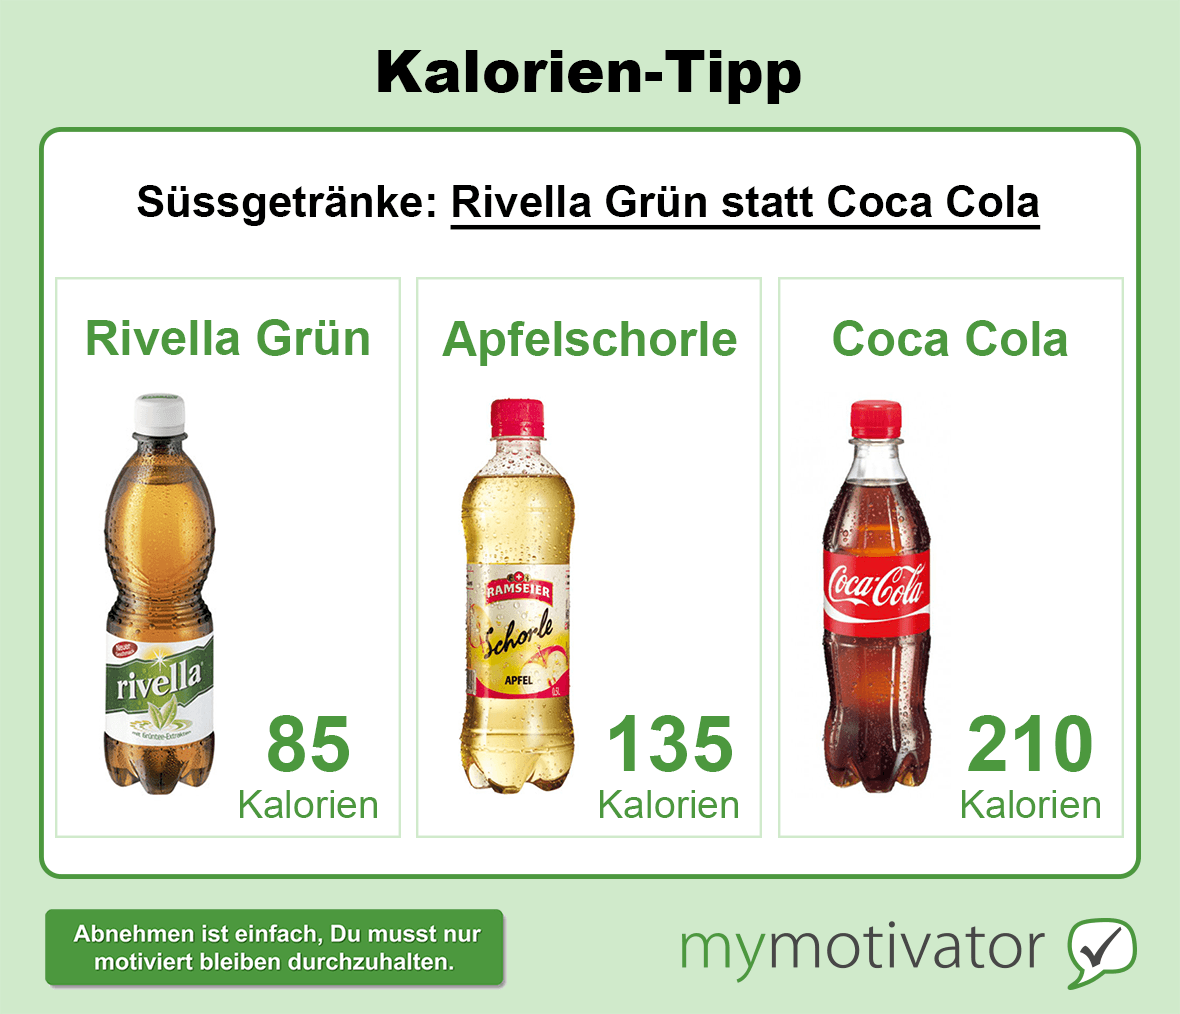 Kalorien-Tipp Süssgetränke: Rivella Grün statt Coca Cola oder Apfelschorle